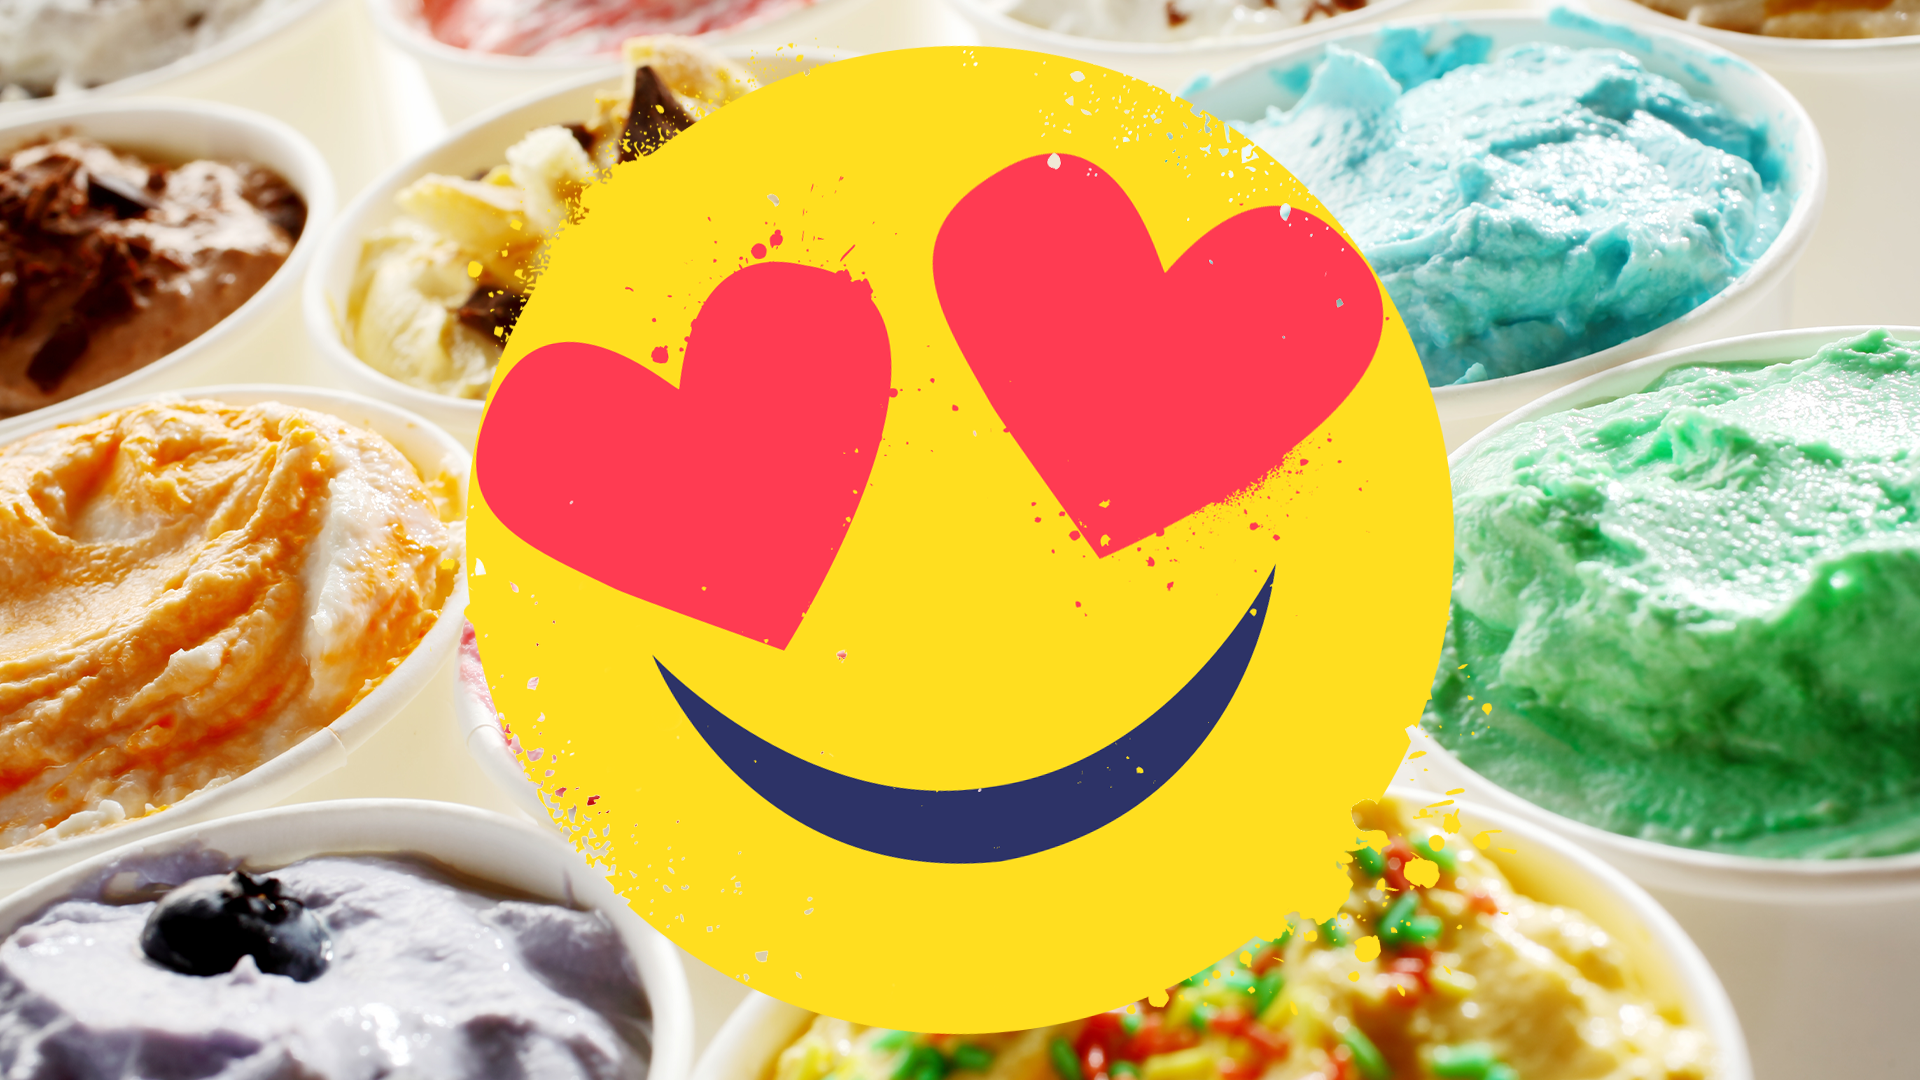 Heart eyes emoji and ice cream